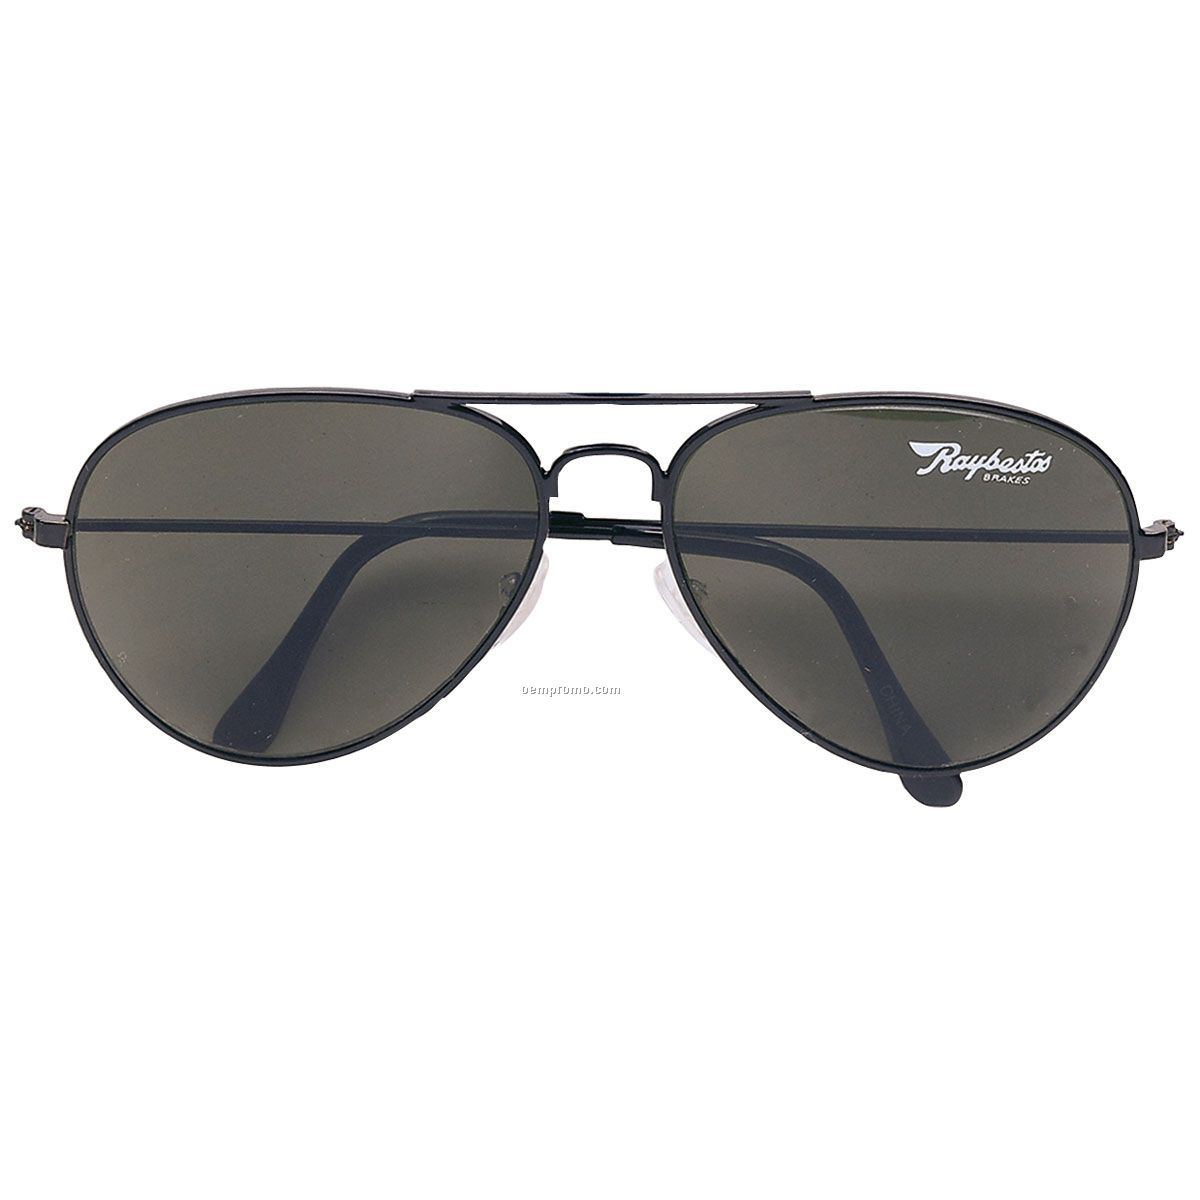 Black Aviators Sunglasses